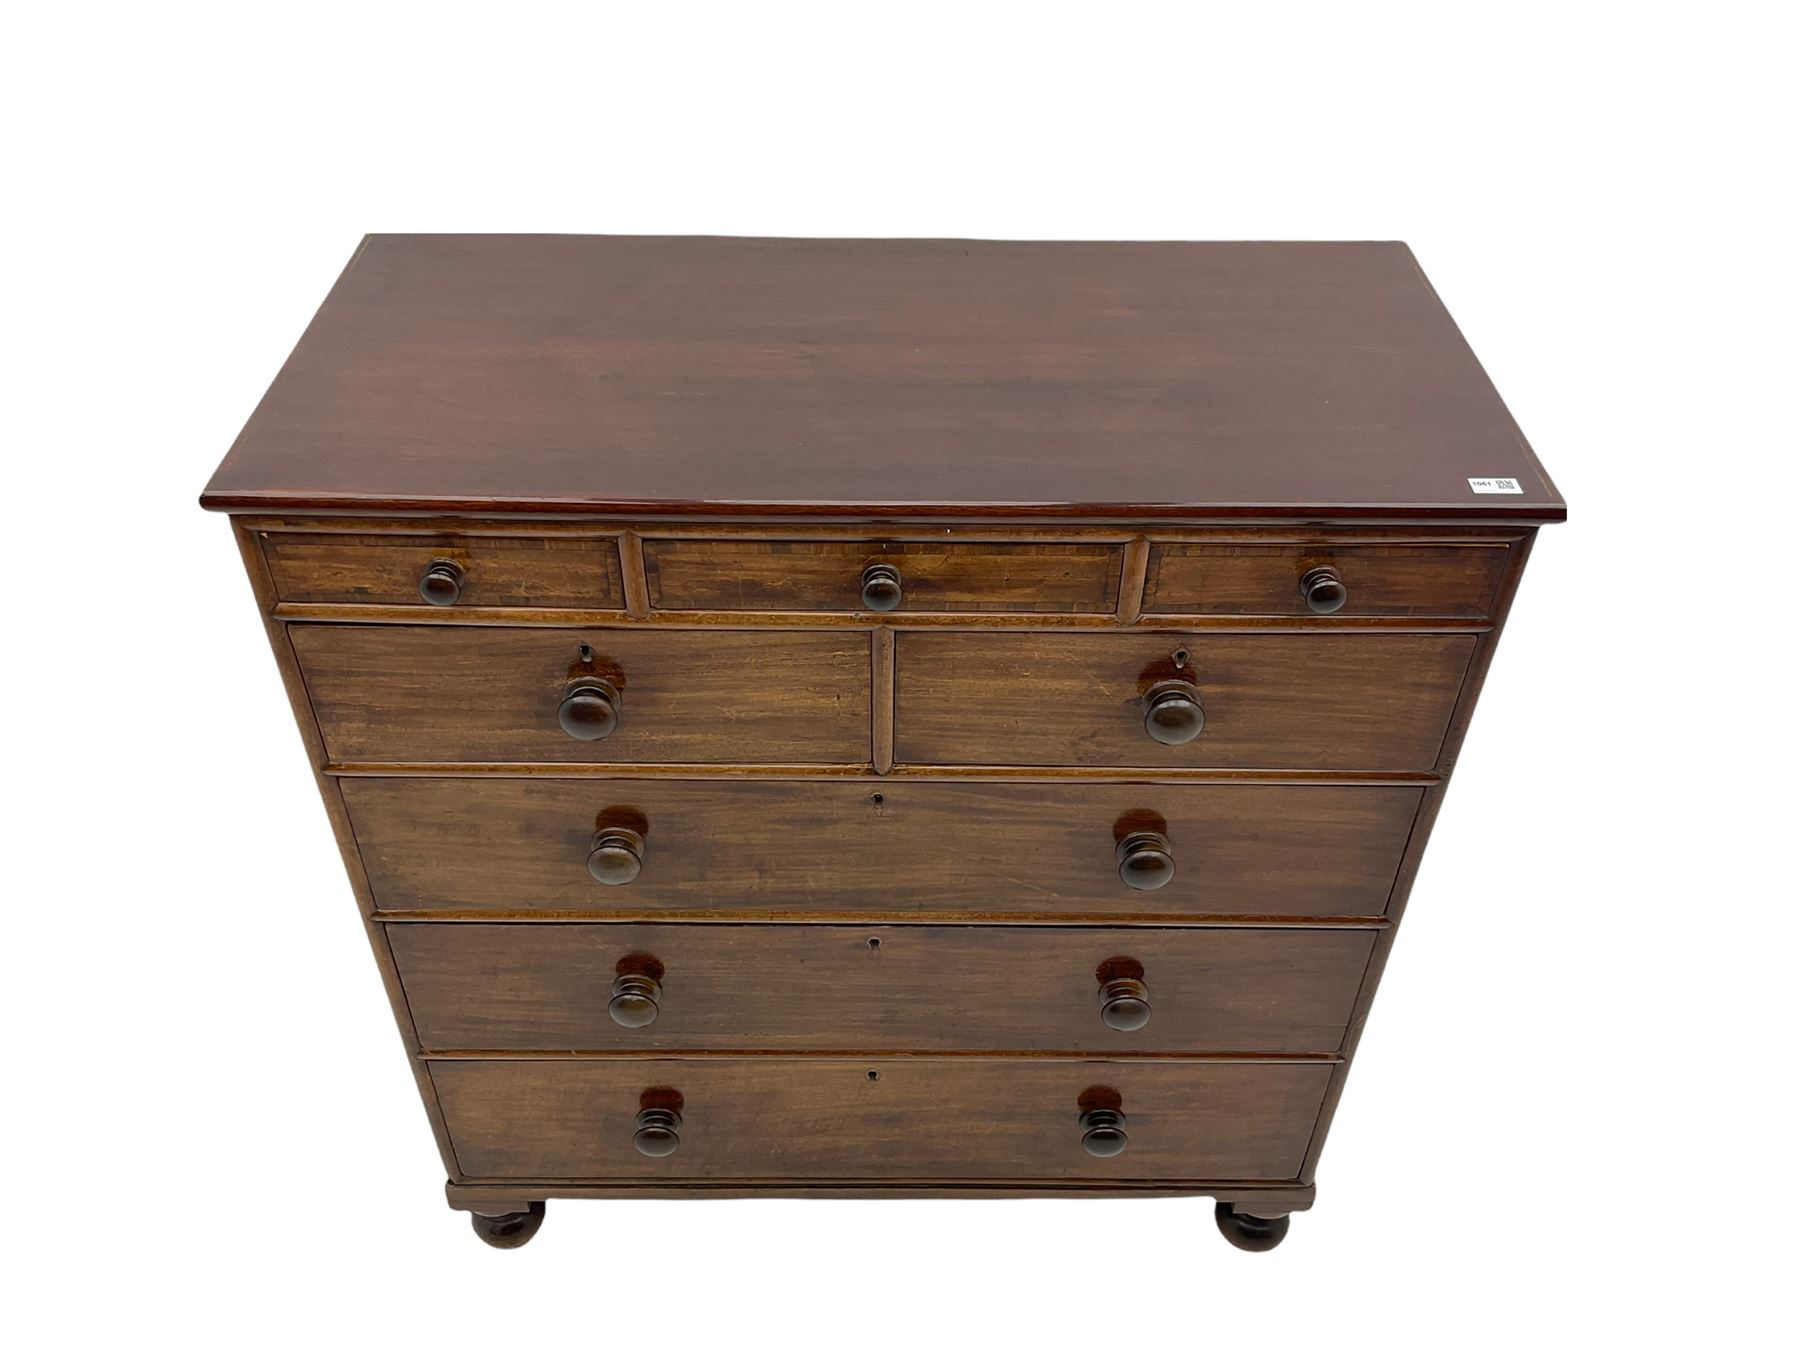 19th century mahogany chest - Image 14 of 14